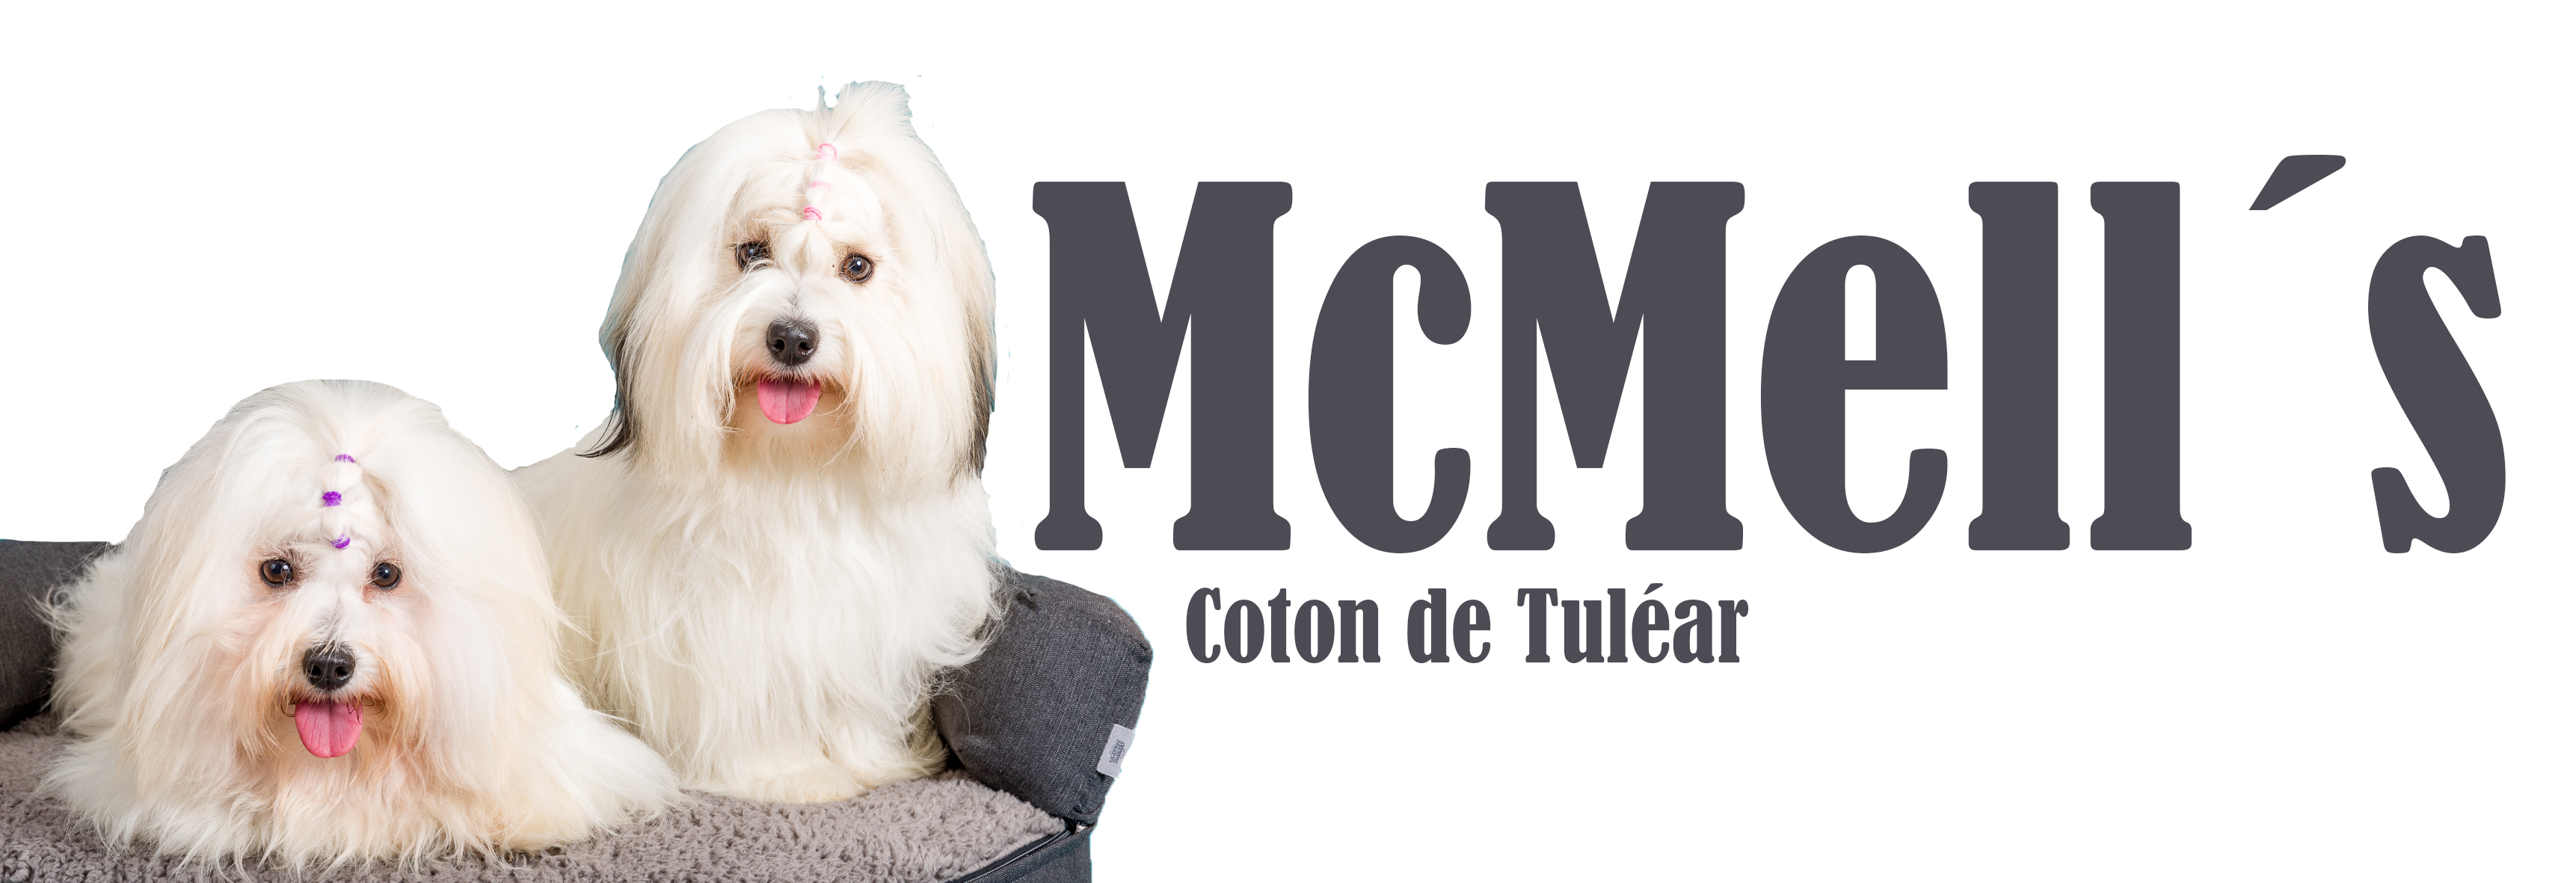 McMells Coton de Tulear